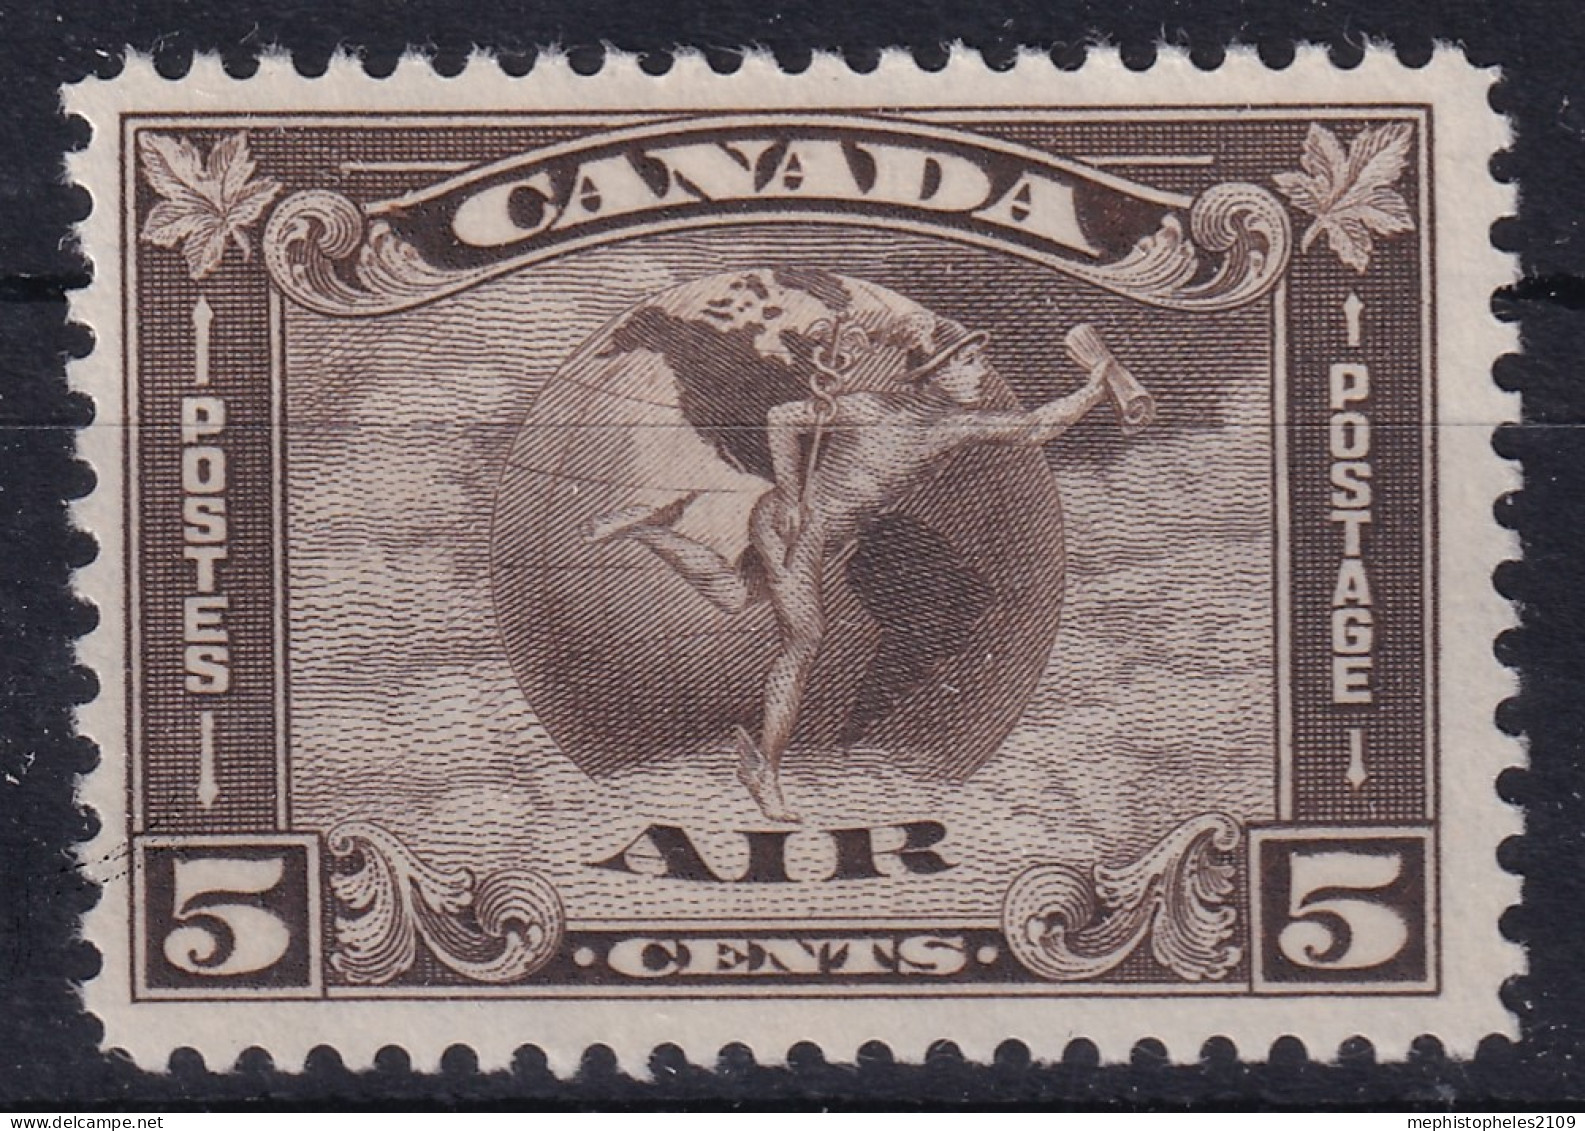 CANADA 1930 - MNH - Sc# C2 - Air Mail - Aéreo